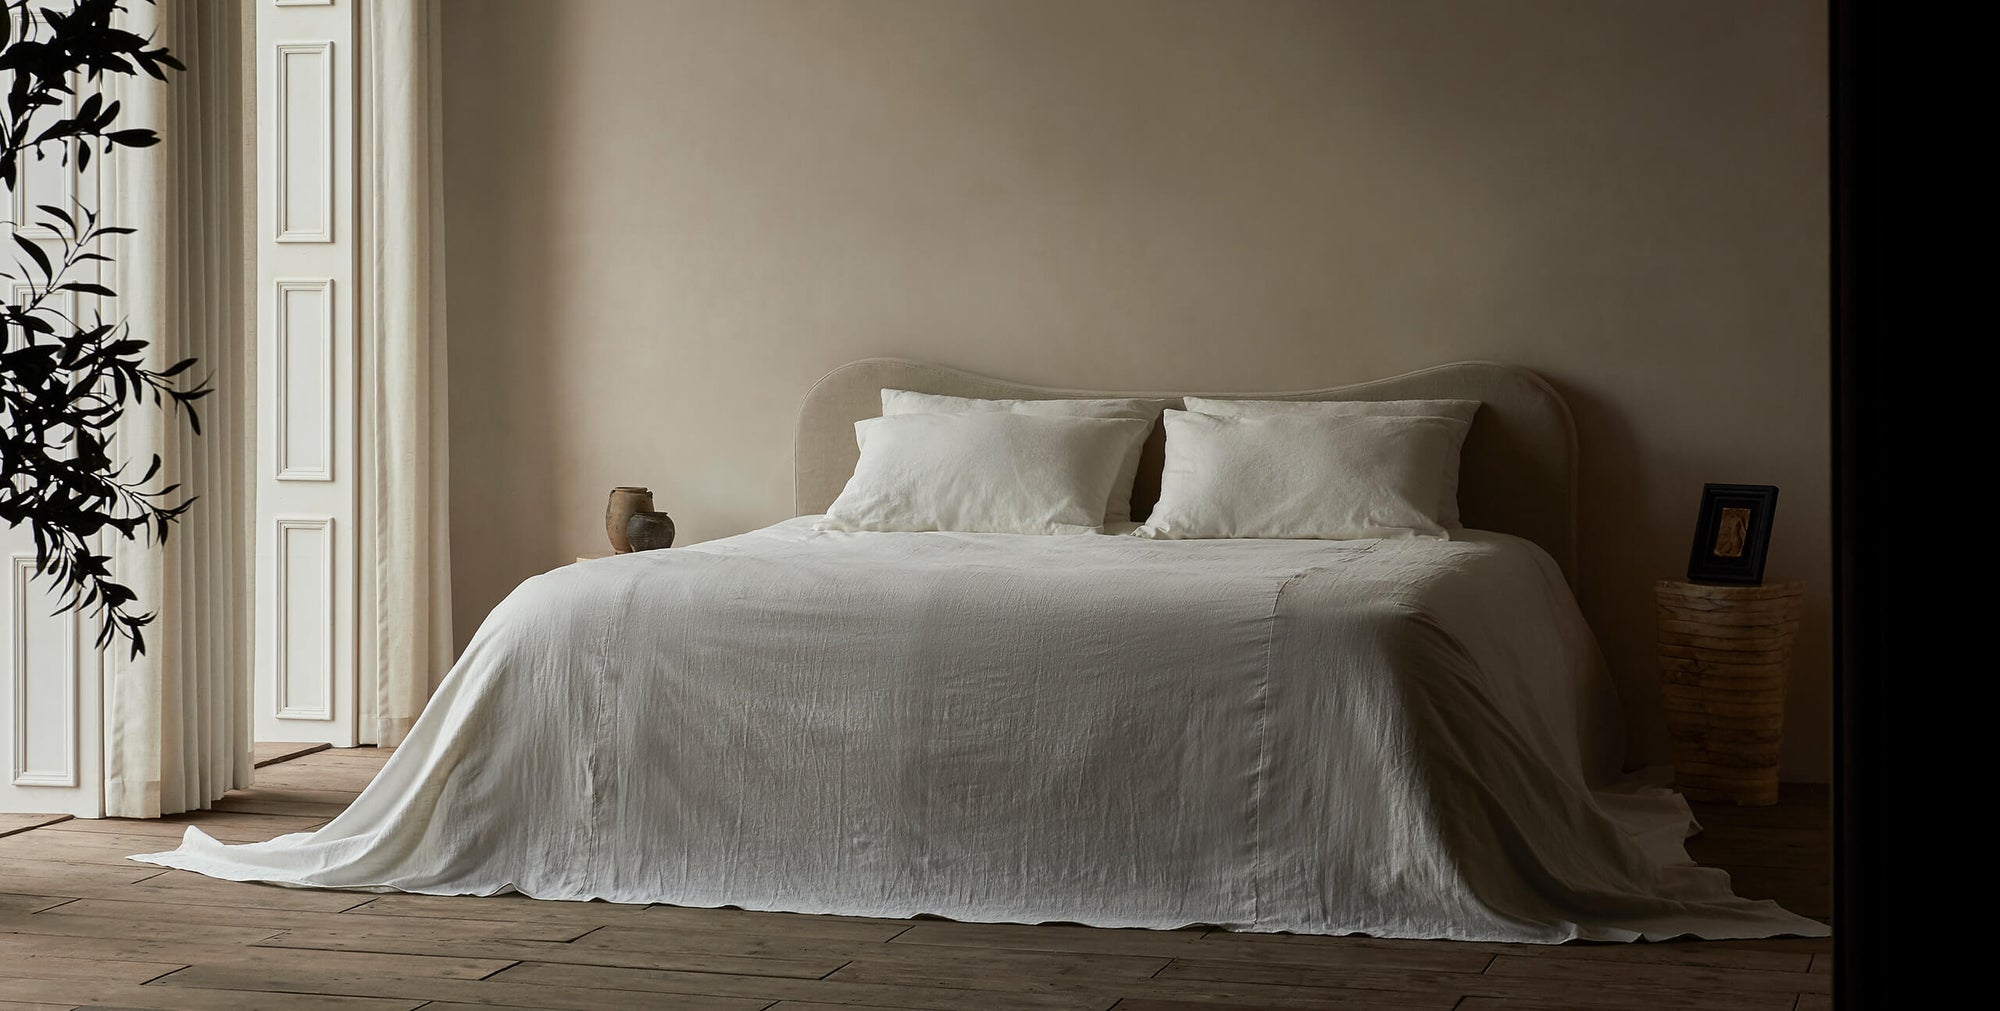 Esmé King Bed in Warm Oatmeal, a light warm beige Medium Weight Linen, made up with white linen bedding